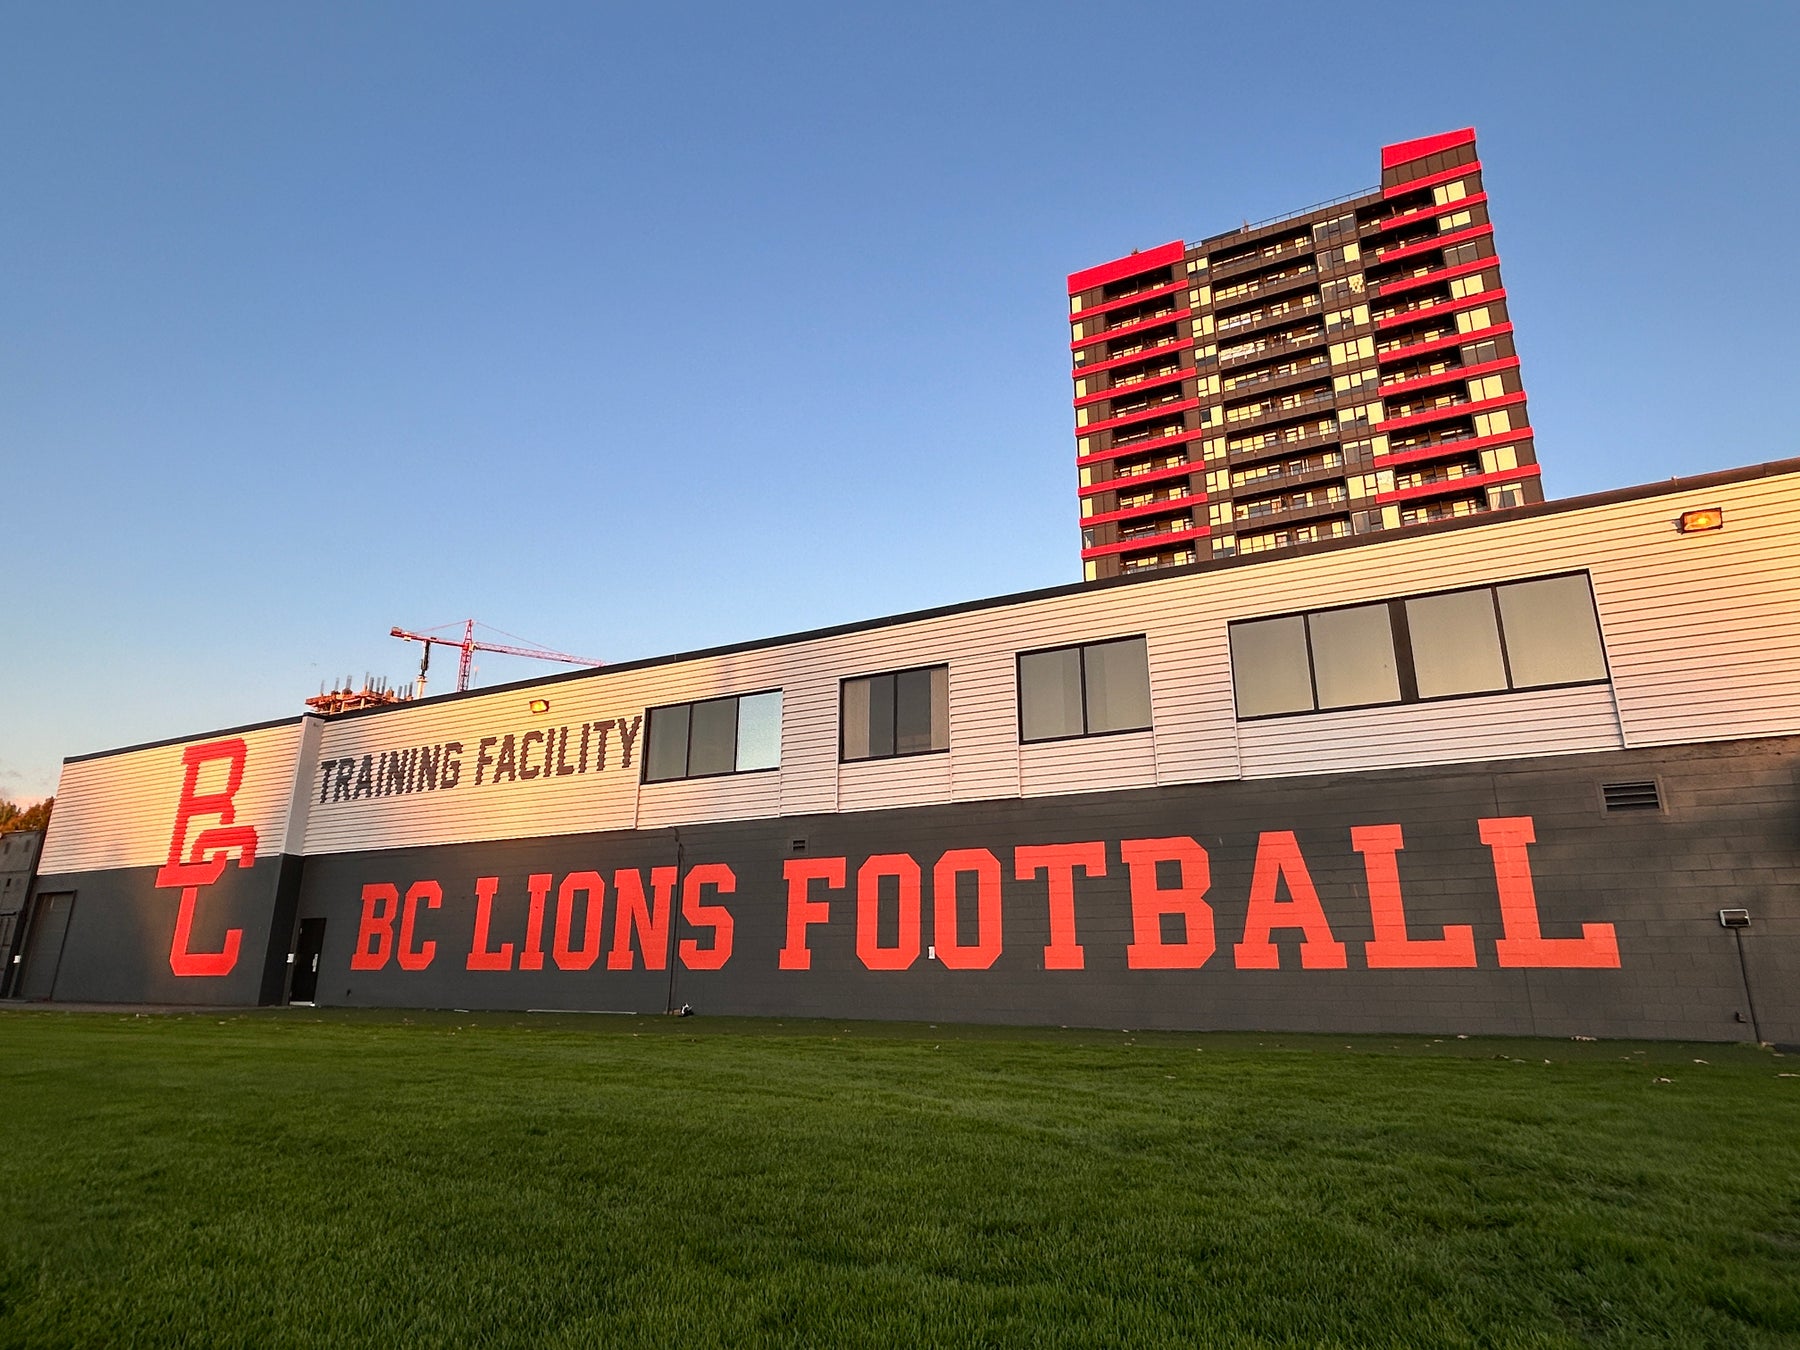 BC Lions training facility